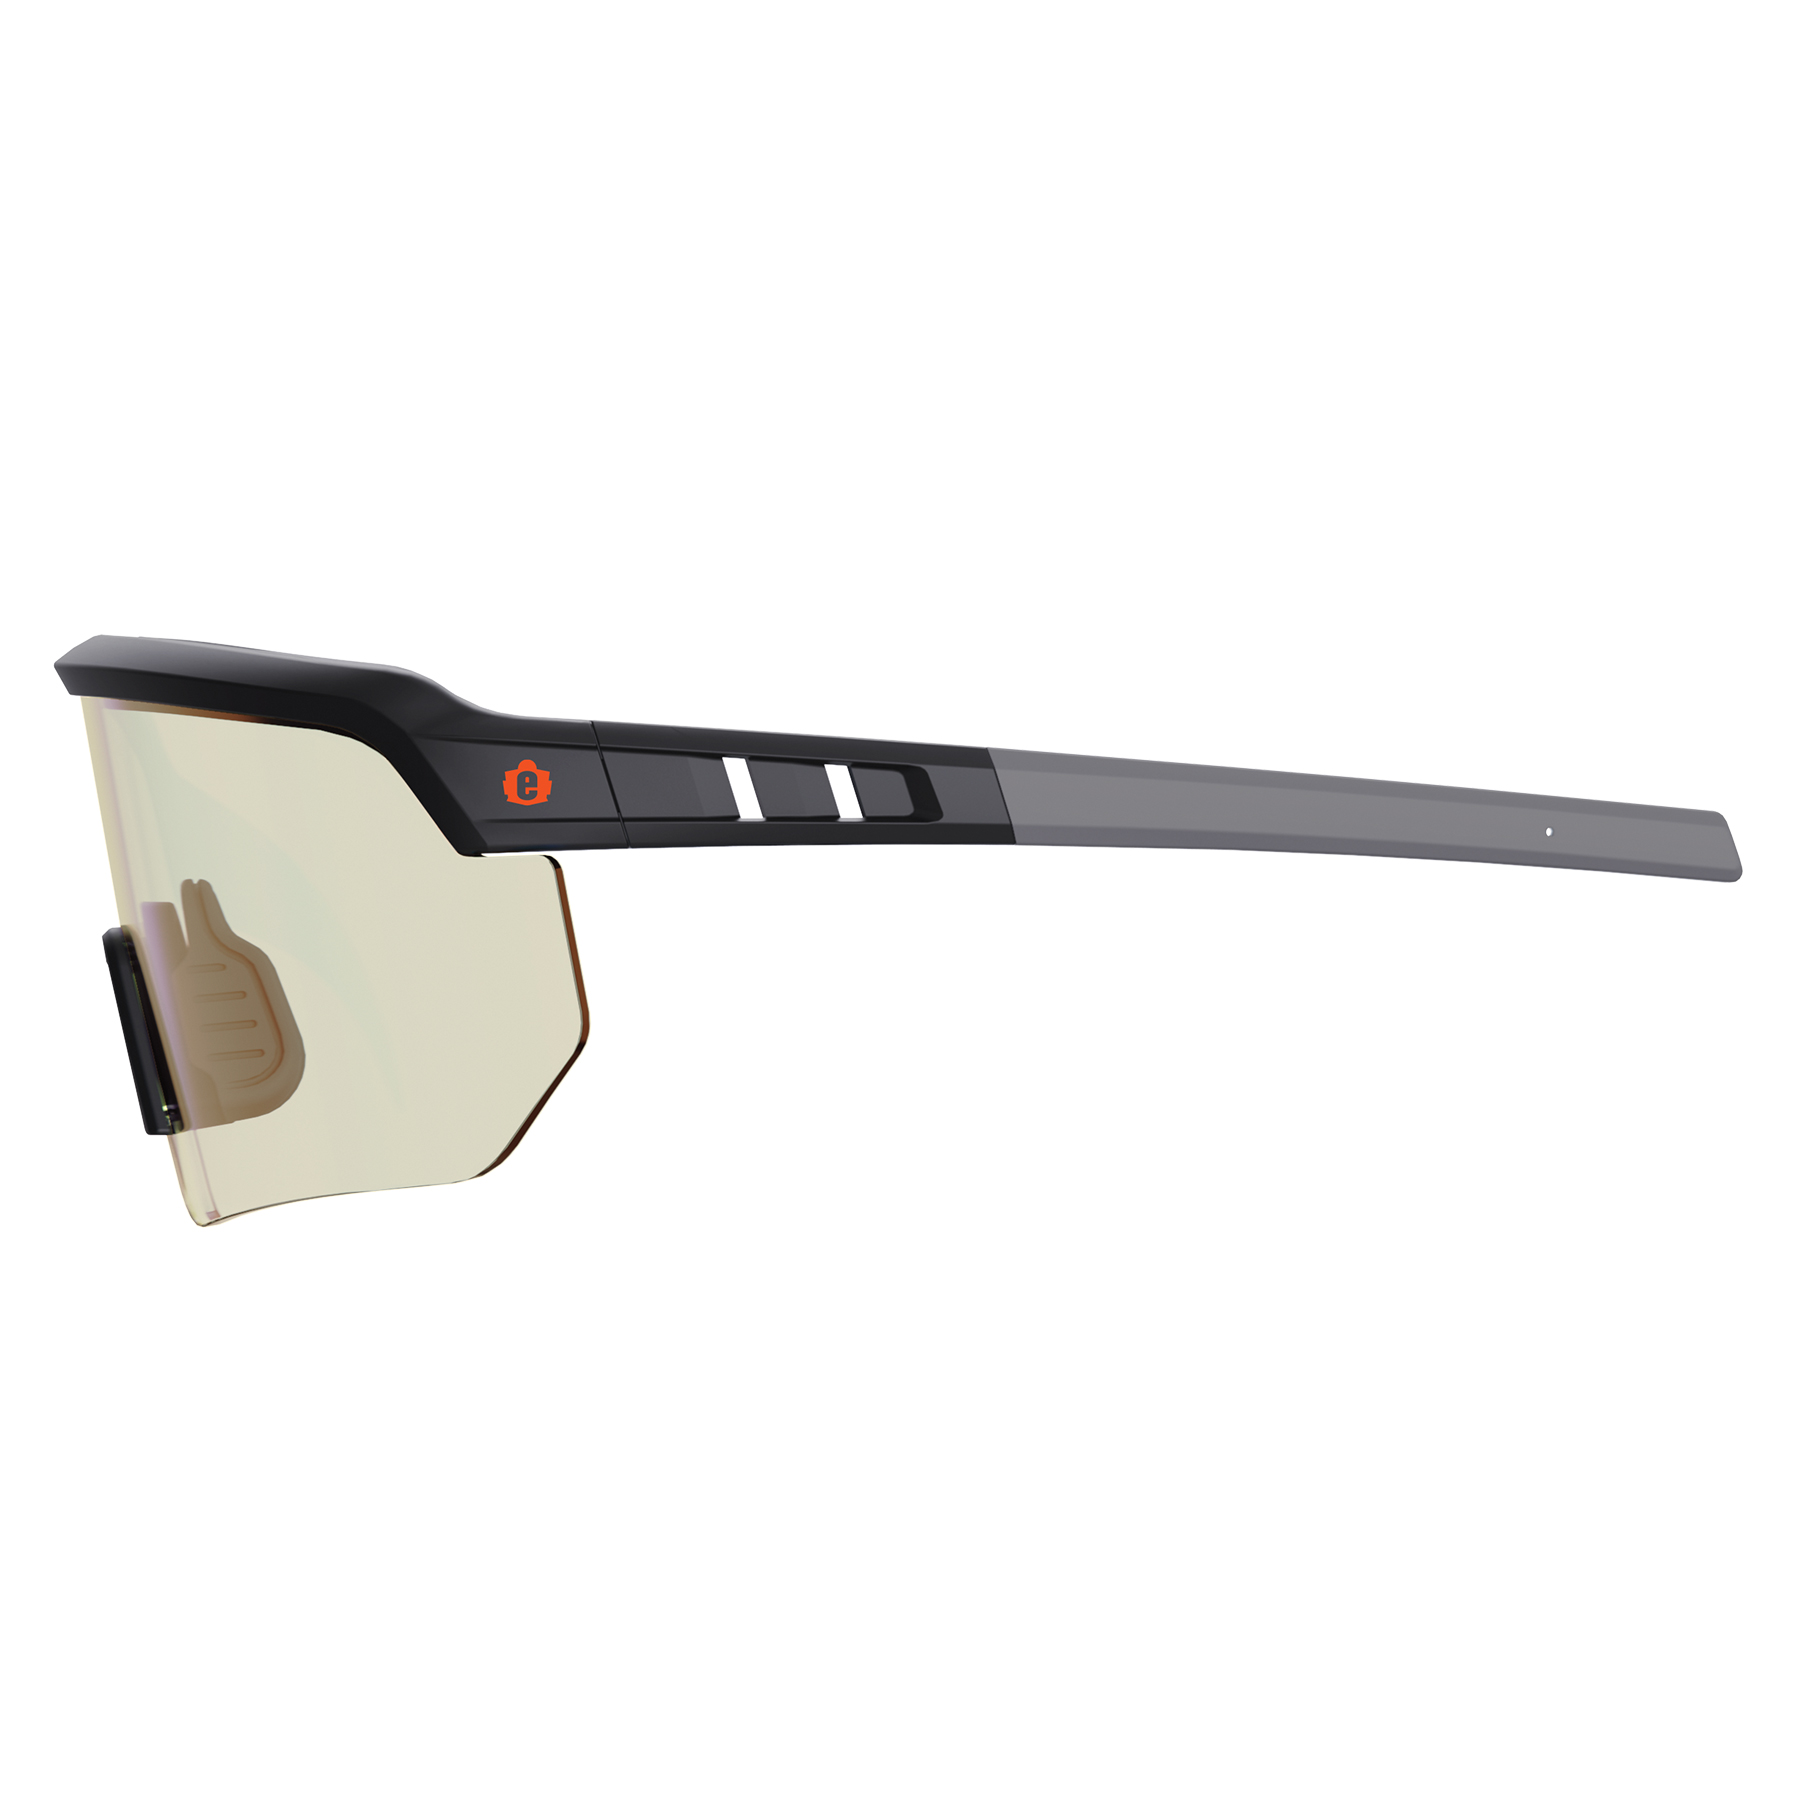 Ergodyne Skullerz AEGIR Sun Safety Glasses from GME Supply